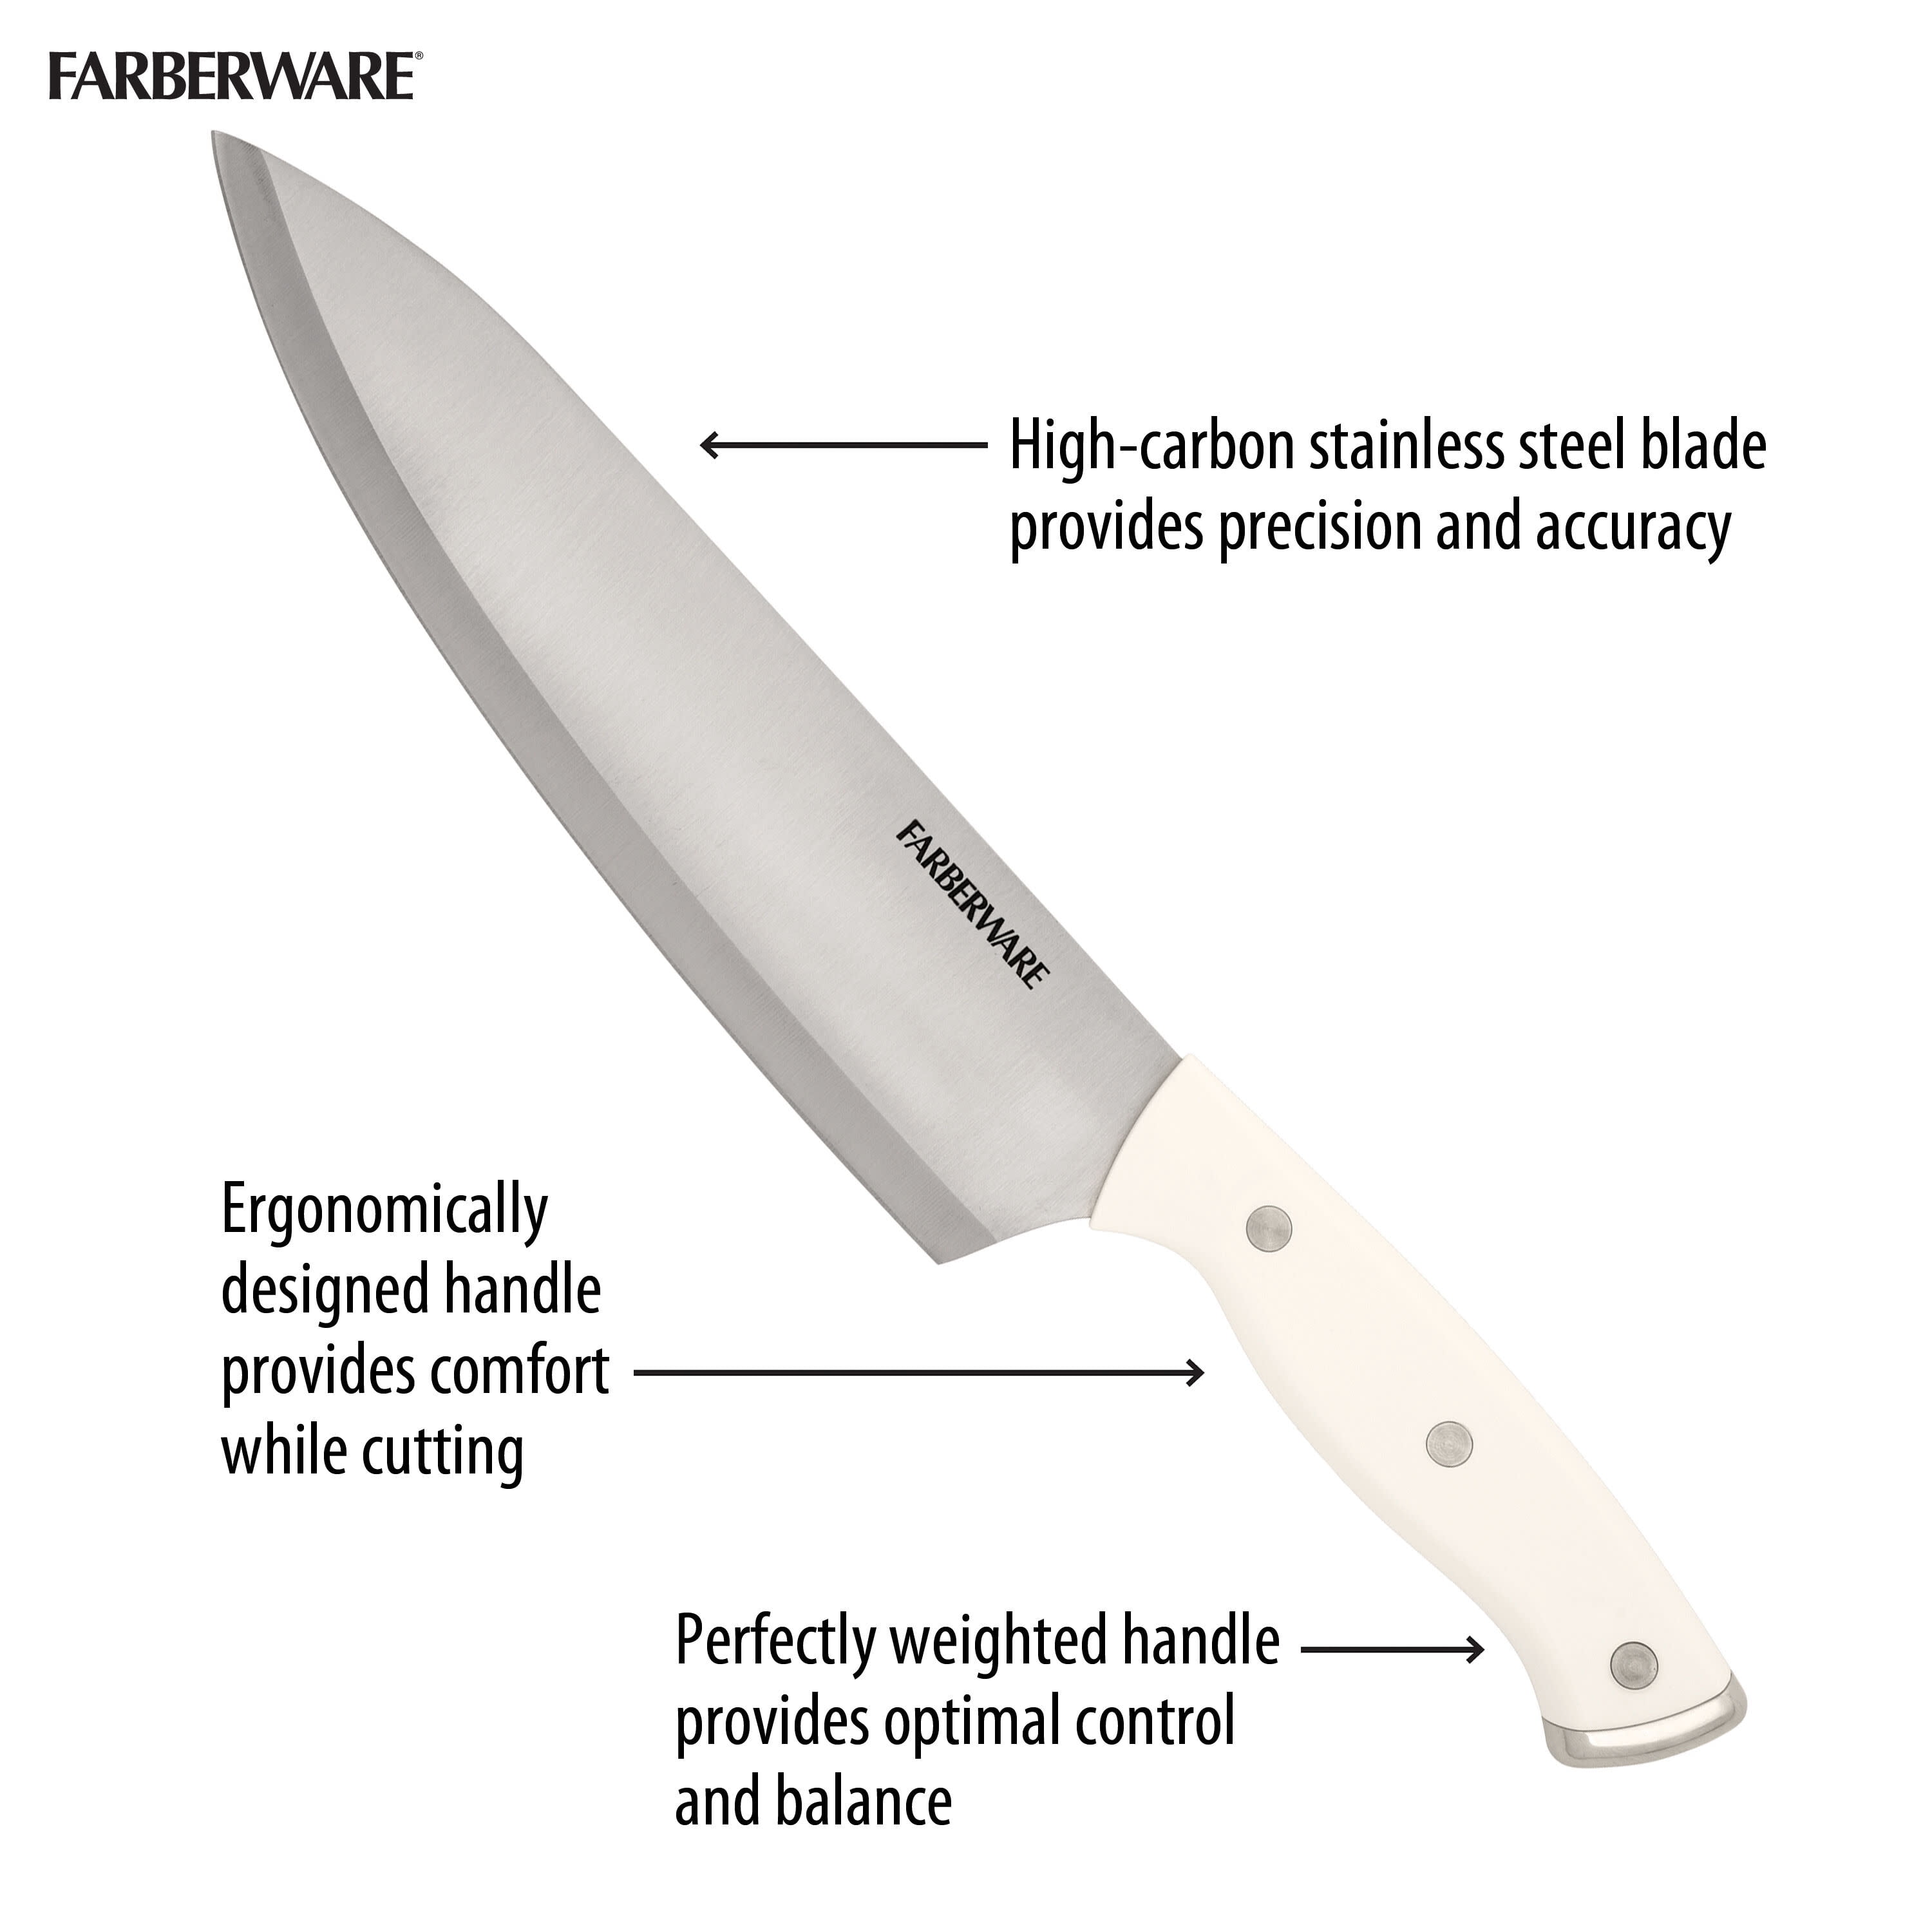 Farberware Edgekeeper 4-Piece Santoku Knife Set 5215104 - The Home Depot